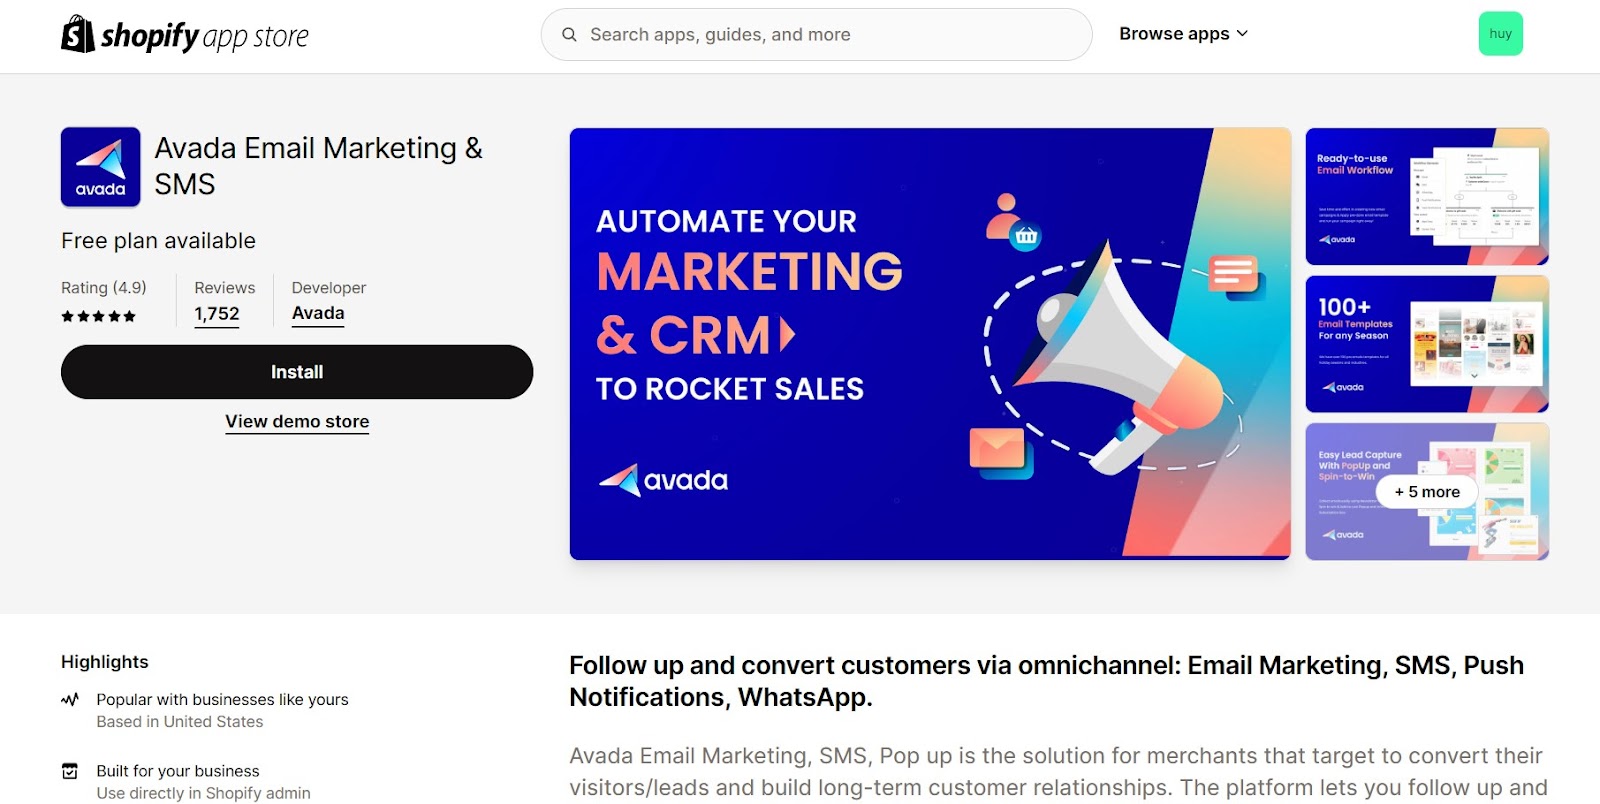 Avada Email Marketing & SMS